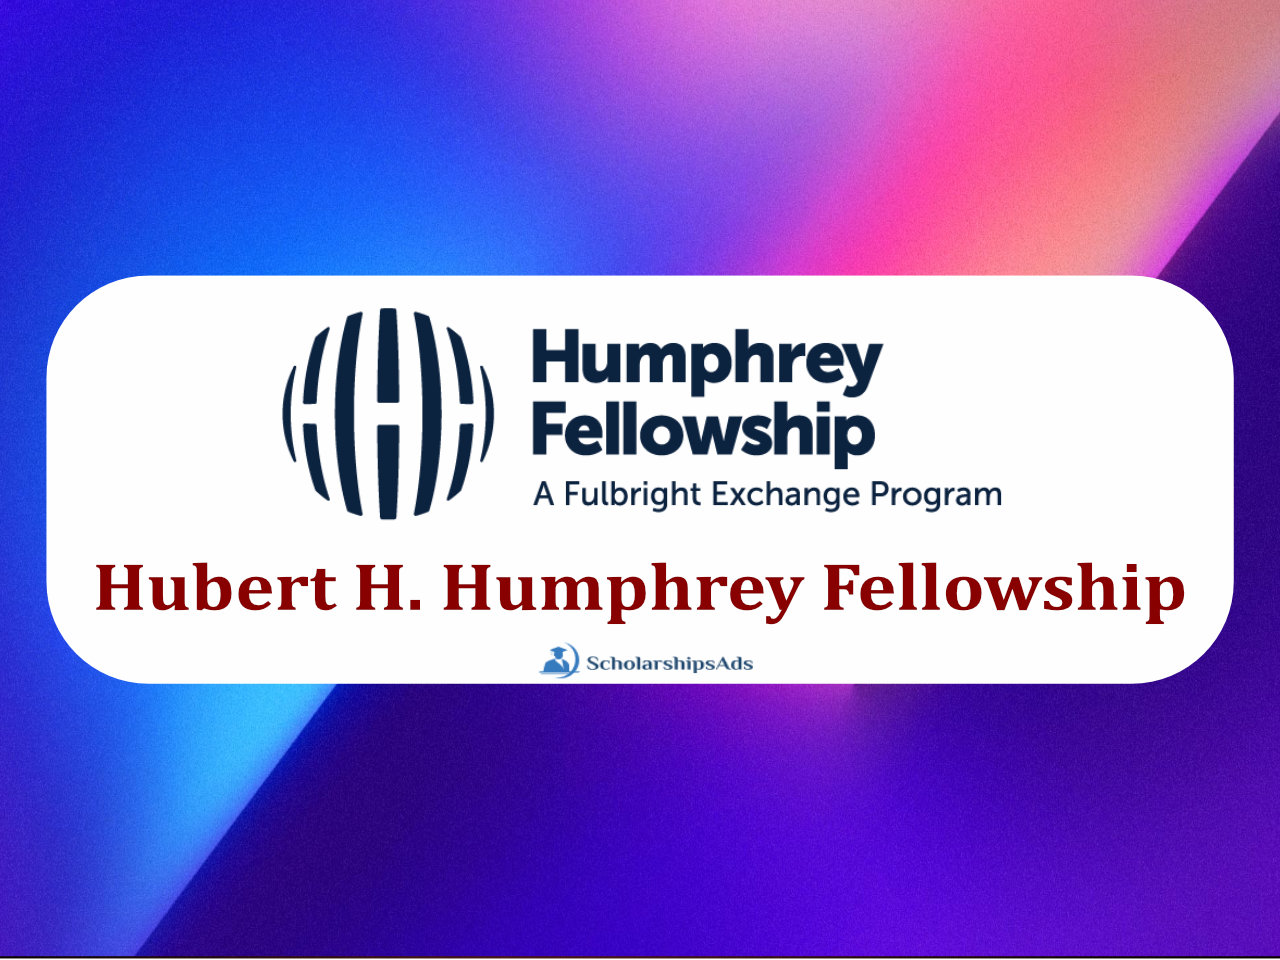 THE HUBERT H. HUMPHREY FELLOWSHIP PROGRAM, USA 2022-23